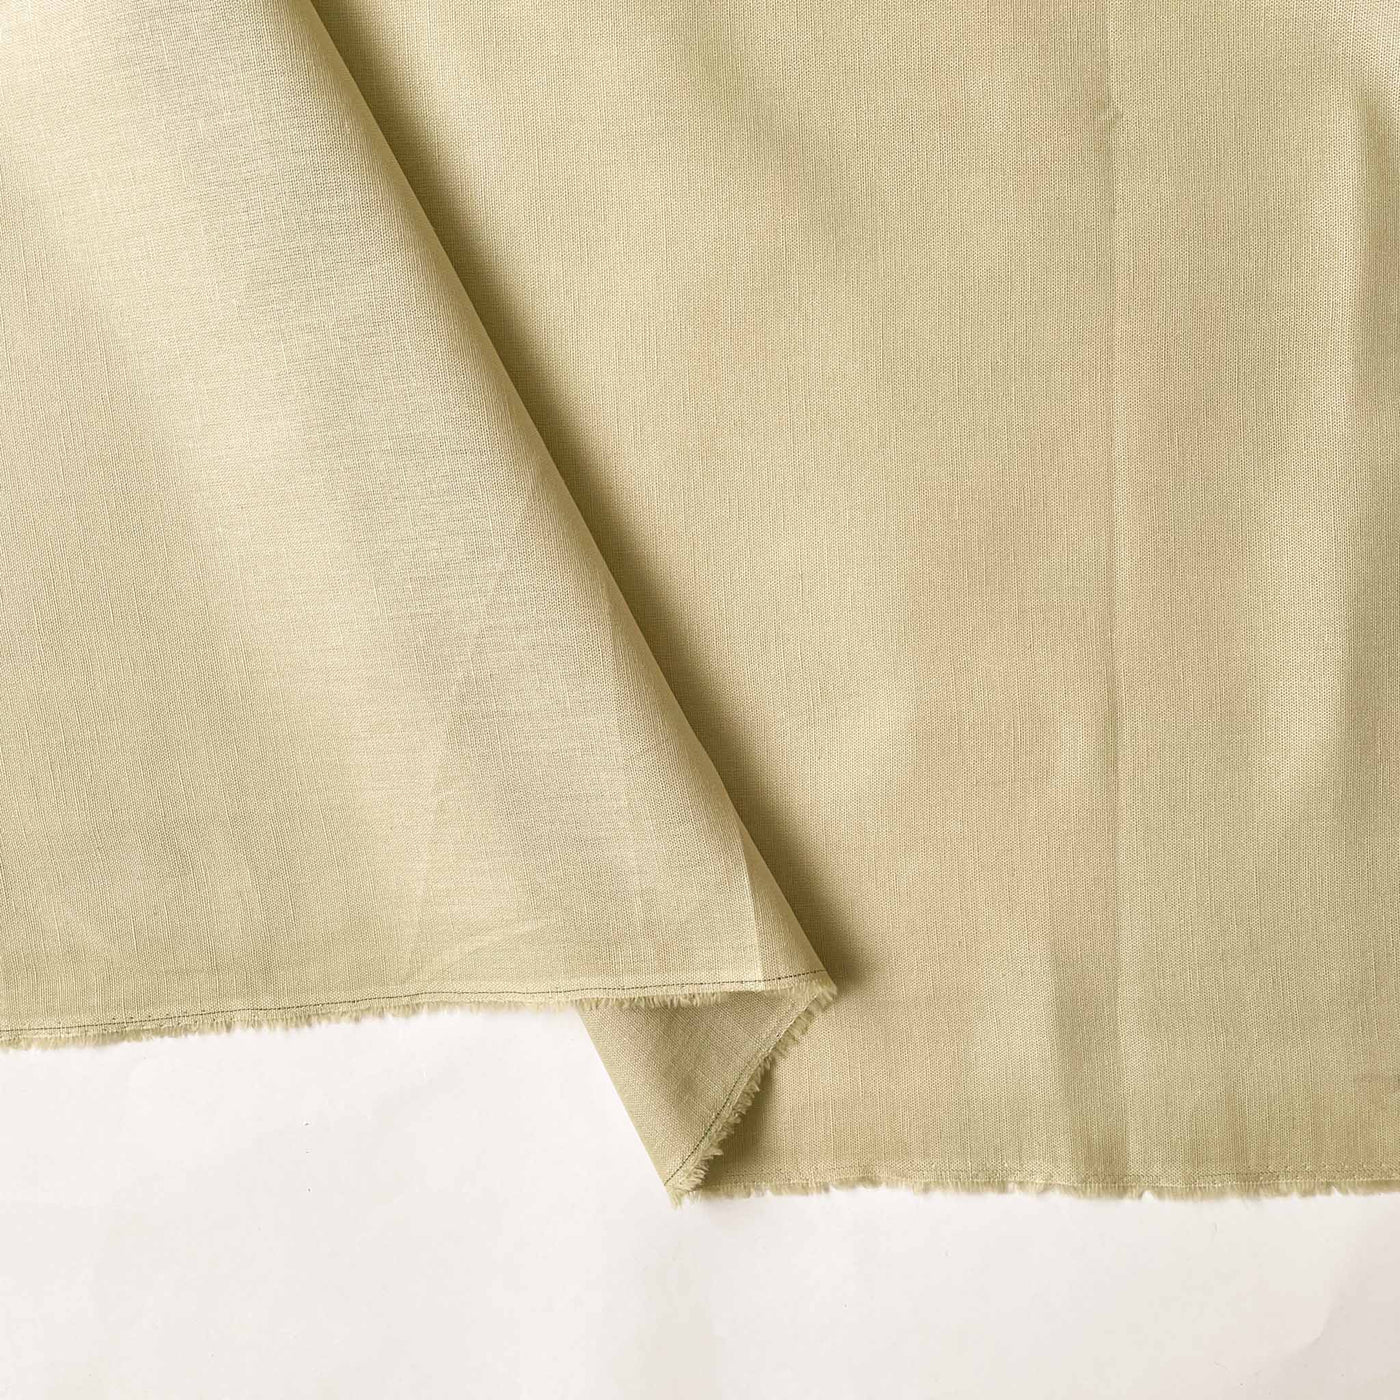 Fabric Pandit Fabric Khaki Color Pure Cotton Linen Fabric (Width 42 Inches)